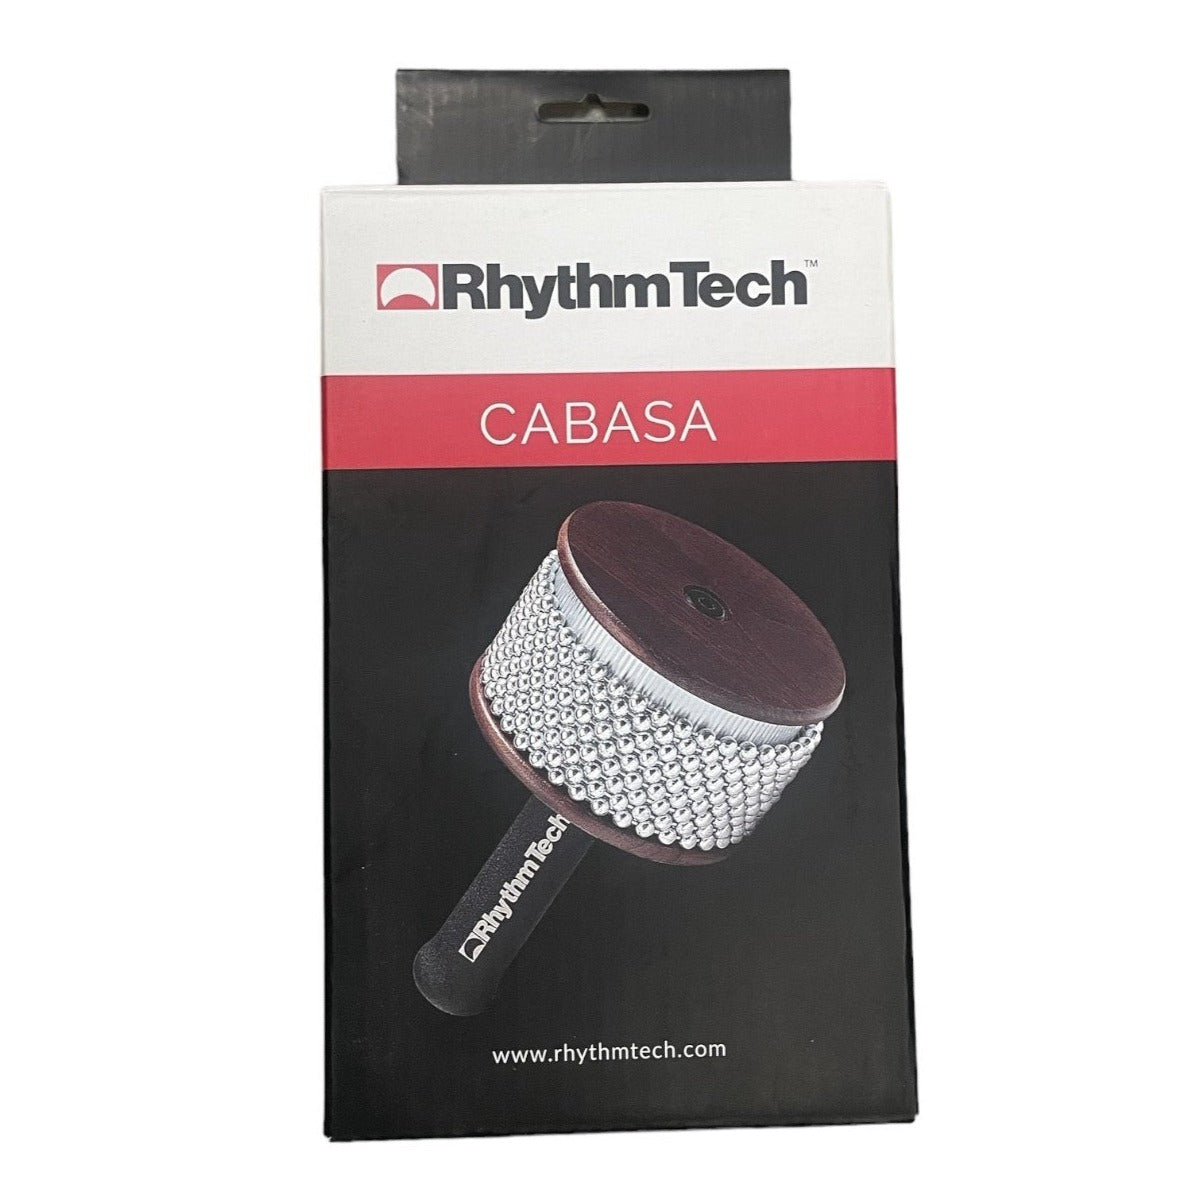 Rhythm Tech Cabasa, Chrome, Hardwood, Rubber, RT8000